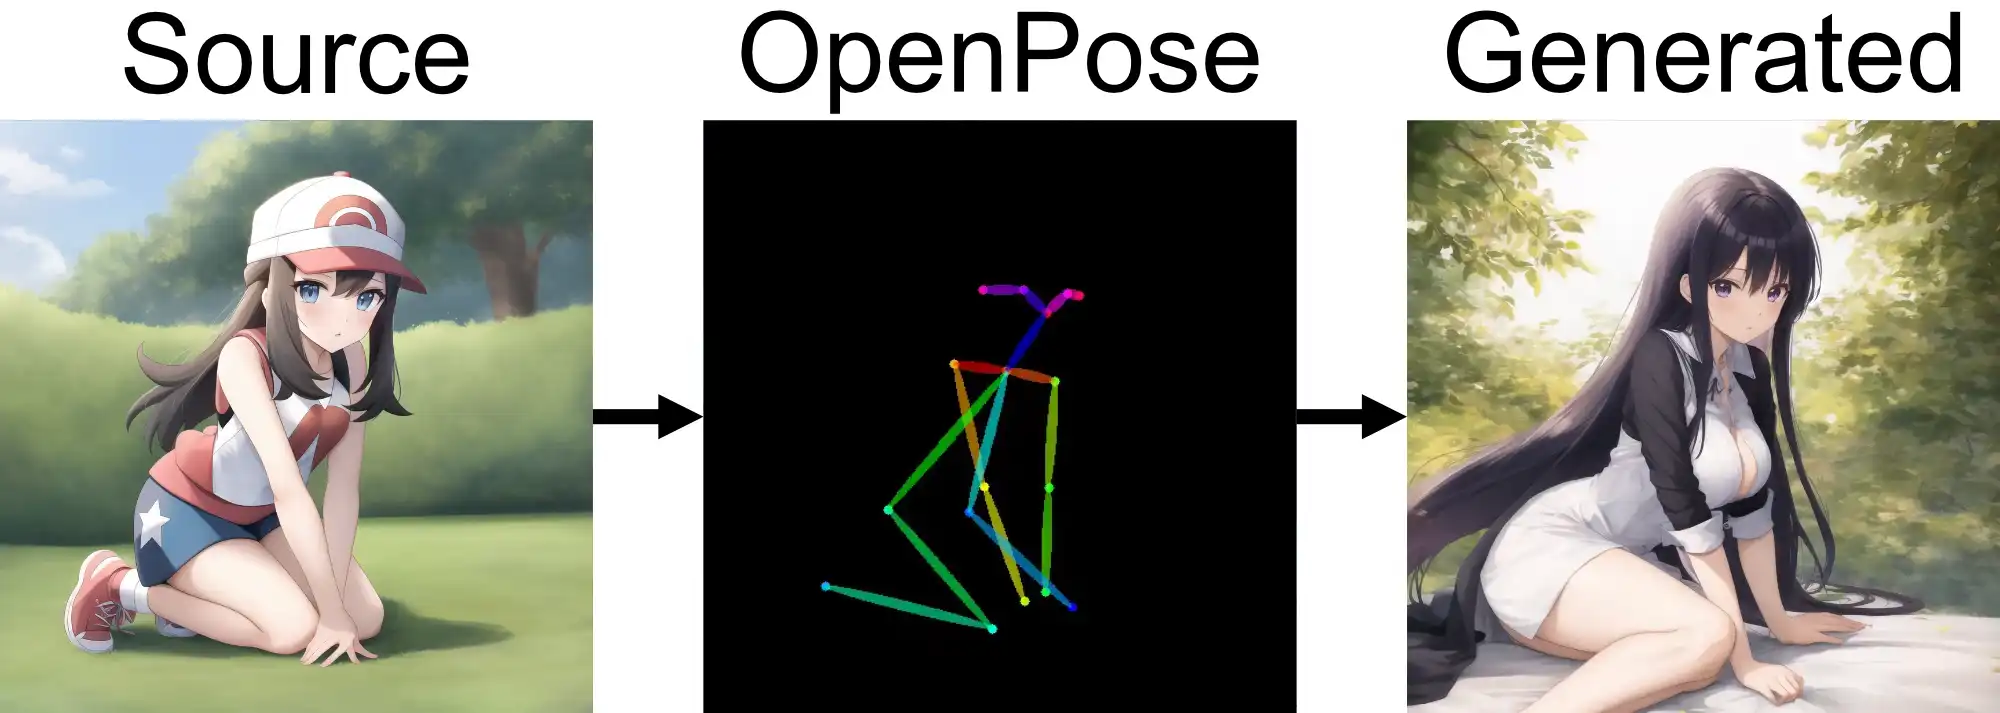 Open Pose model